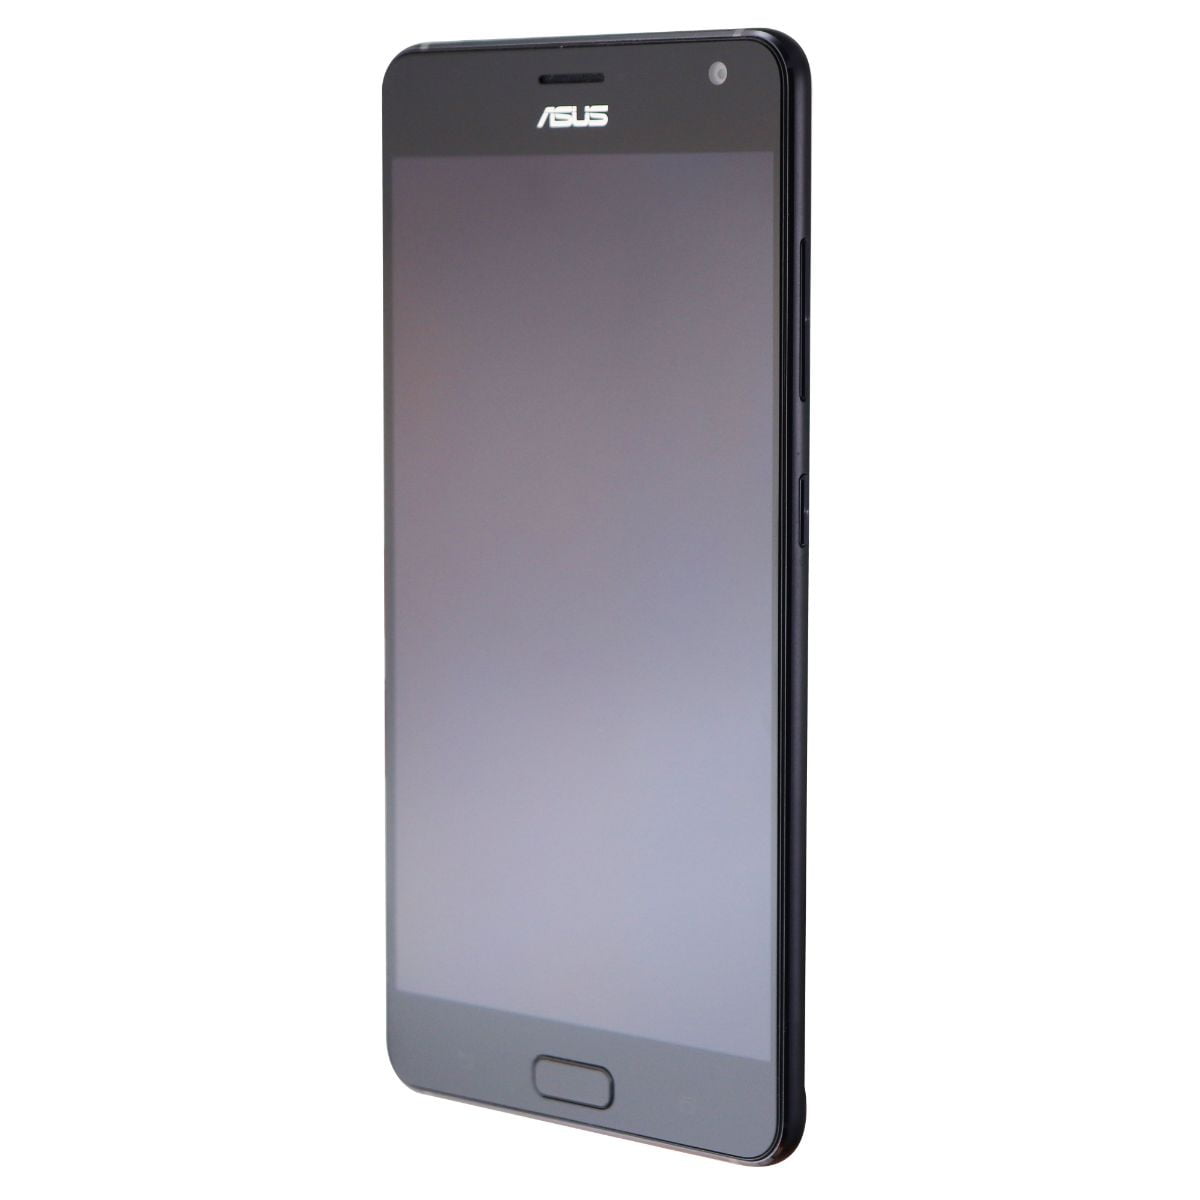 ASUS ZenFone AR Smartphone (ASUS_A002A) Verizon Locked - 128GB / Black (Refurbished)